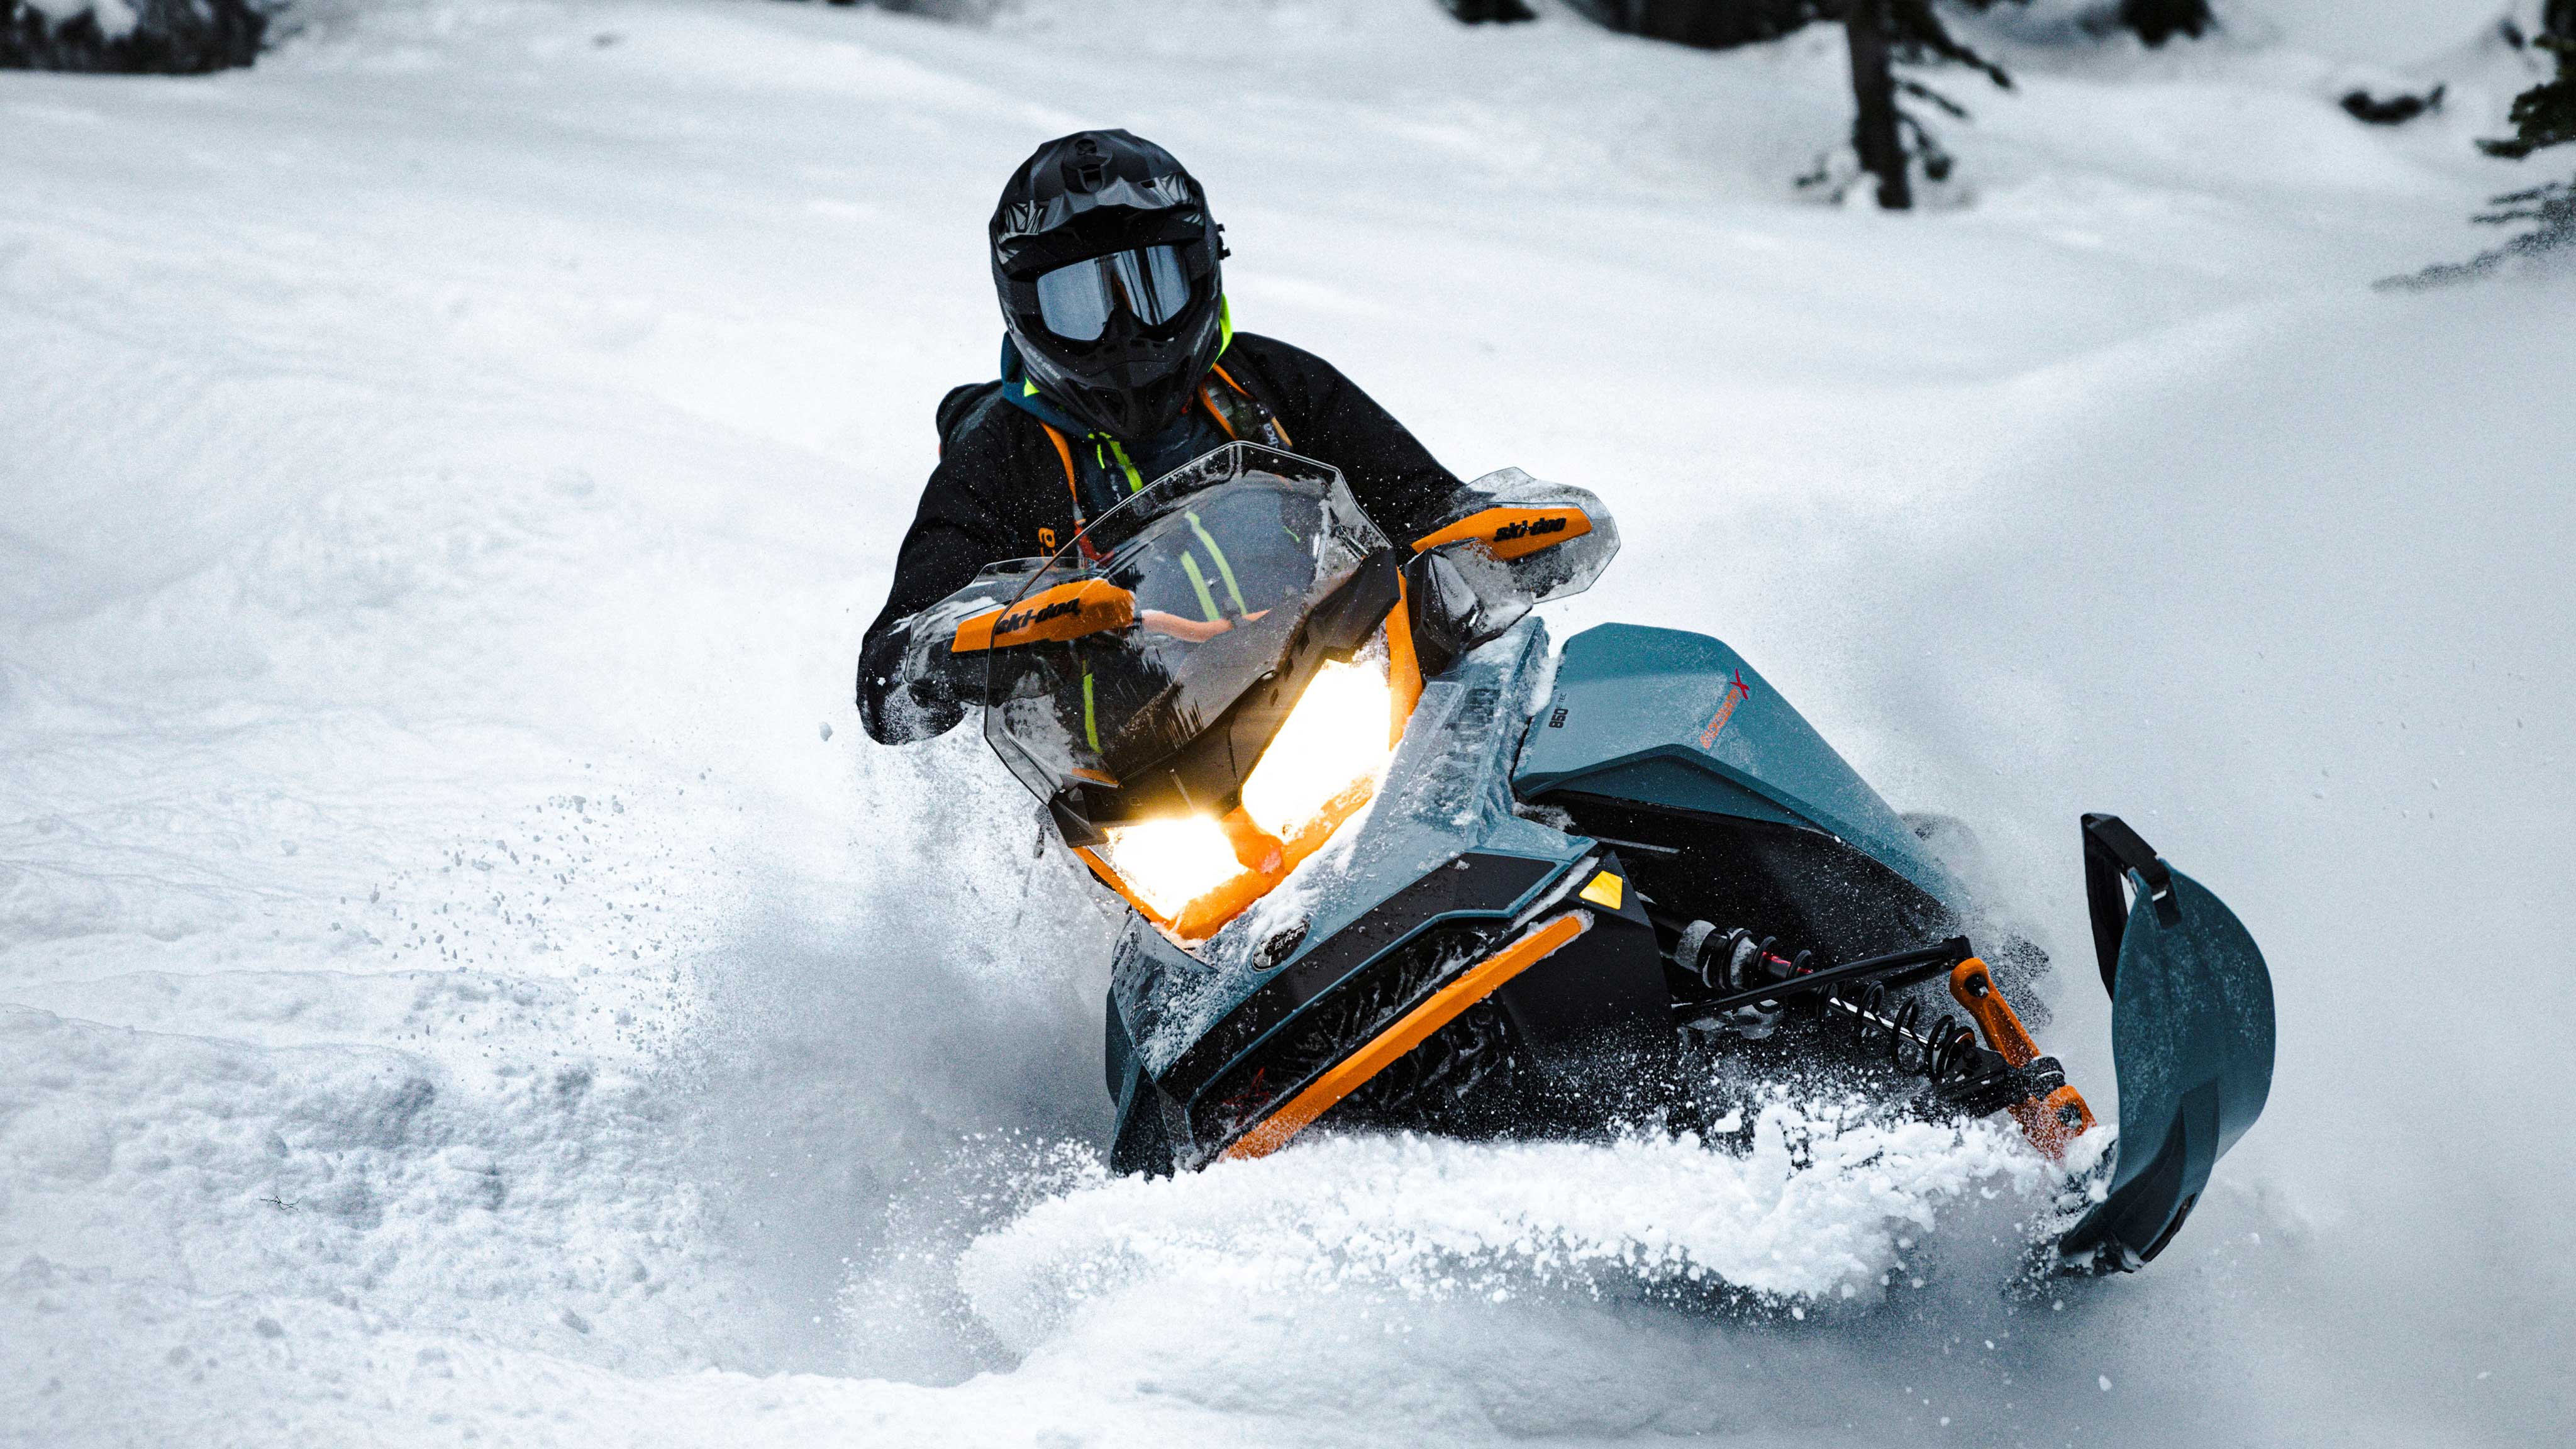 Rider riding a blue Ski-Doo Backcountry snowmobile in deep snow